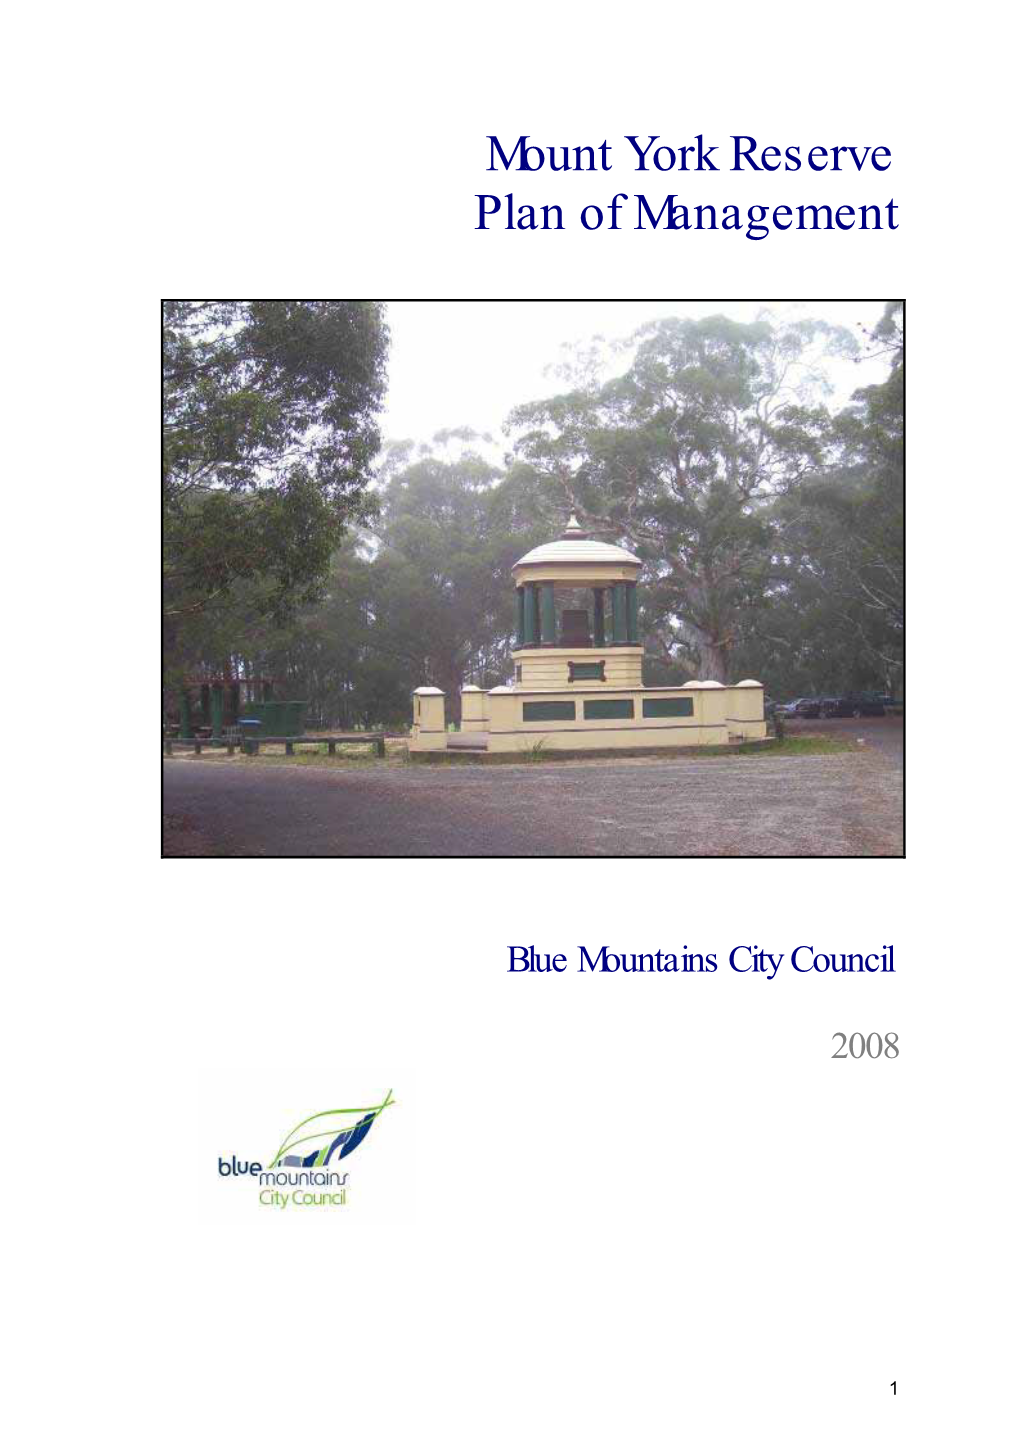 Mount York Reserve Plan of Management